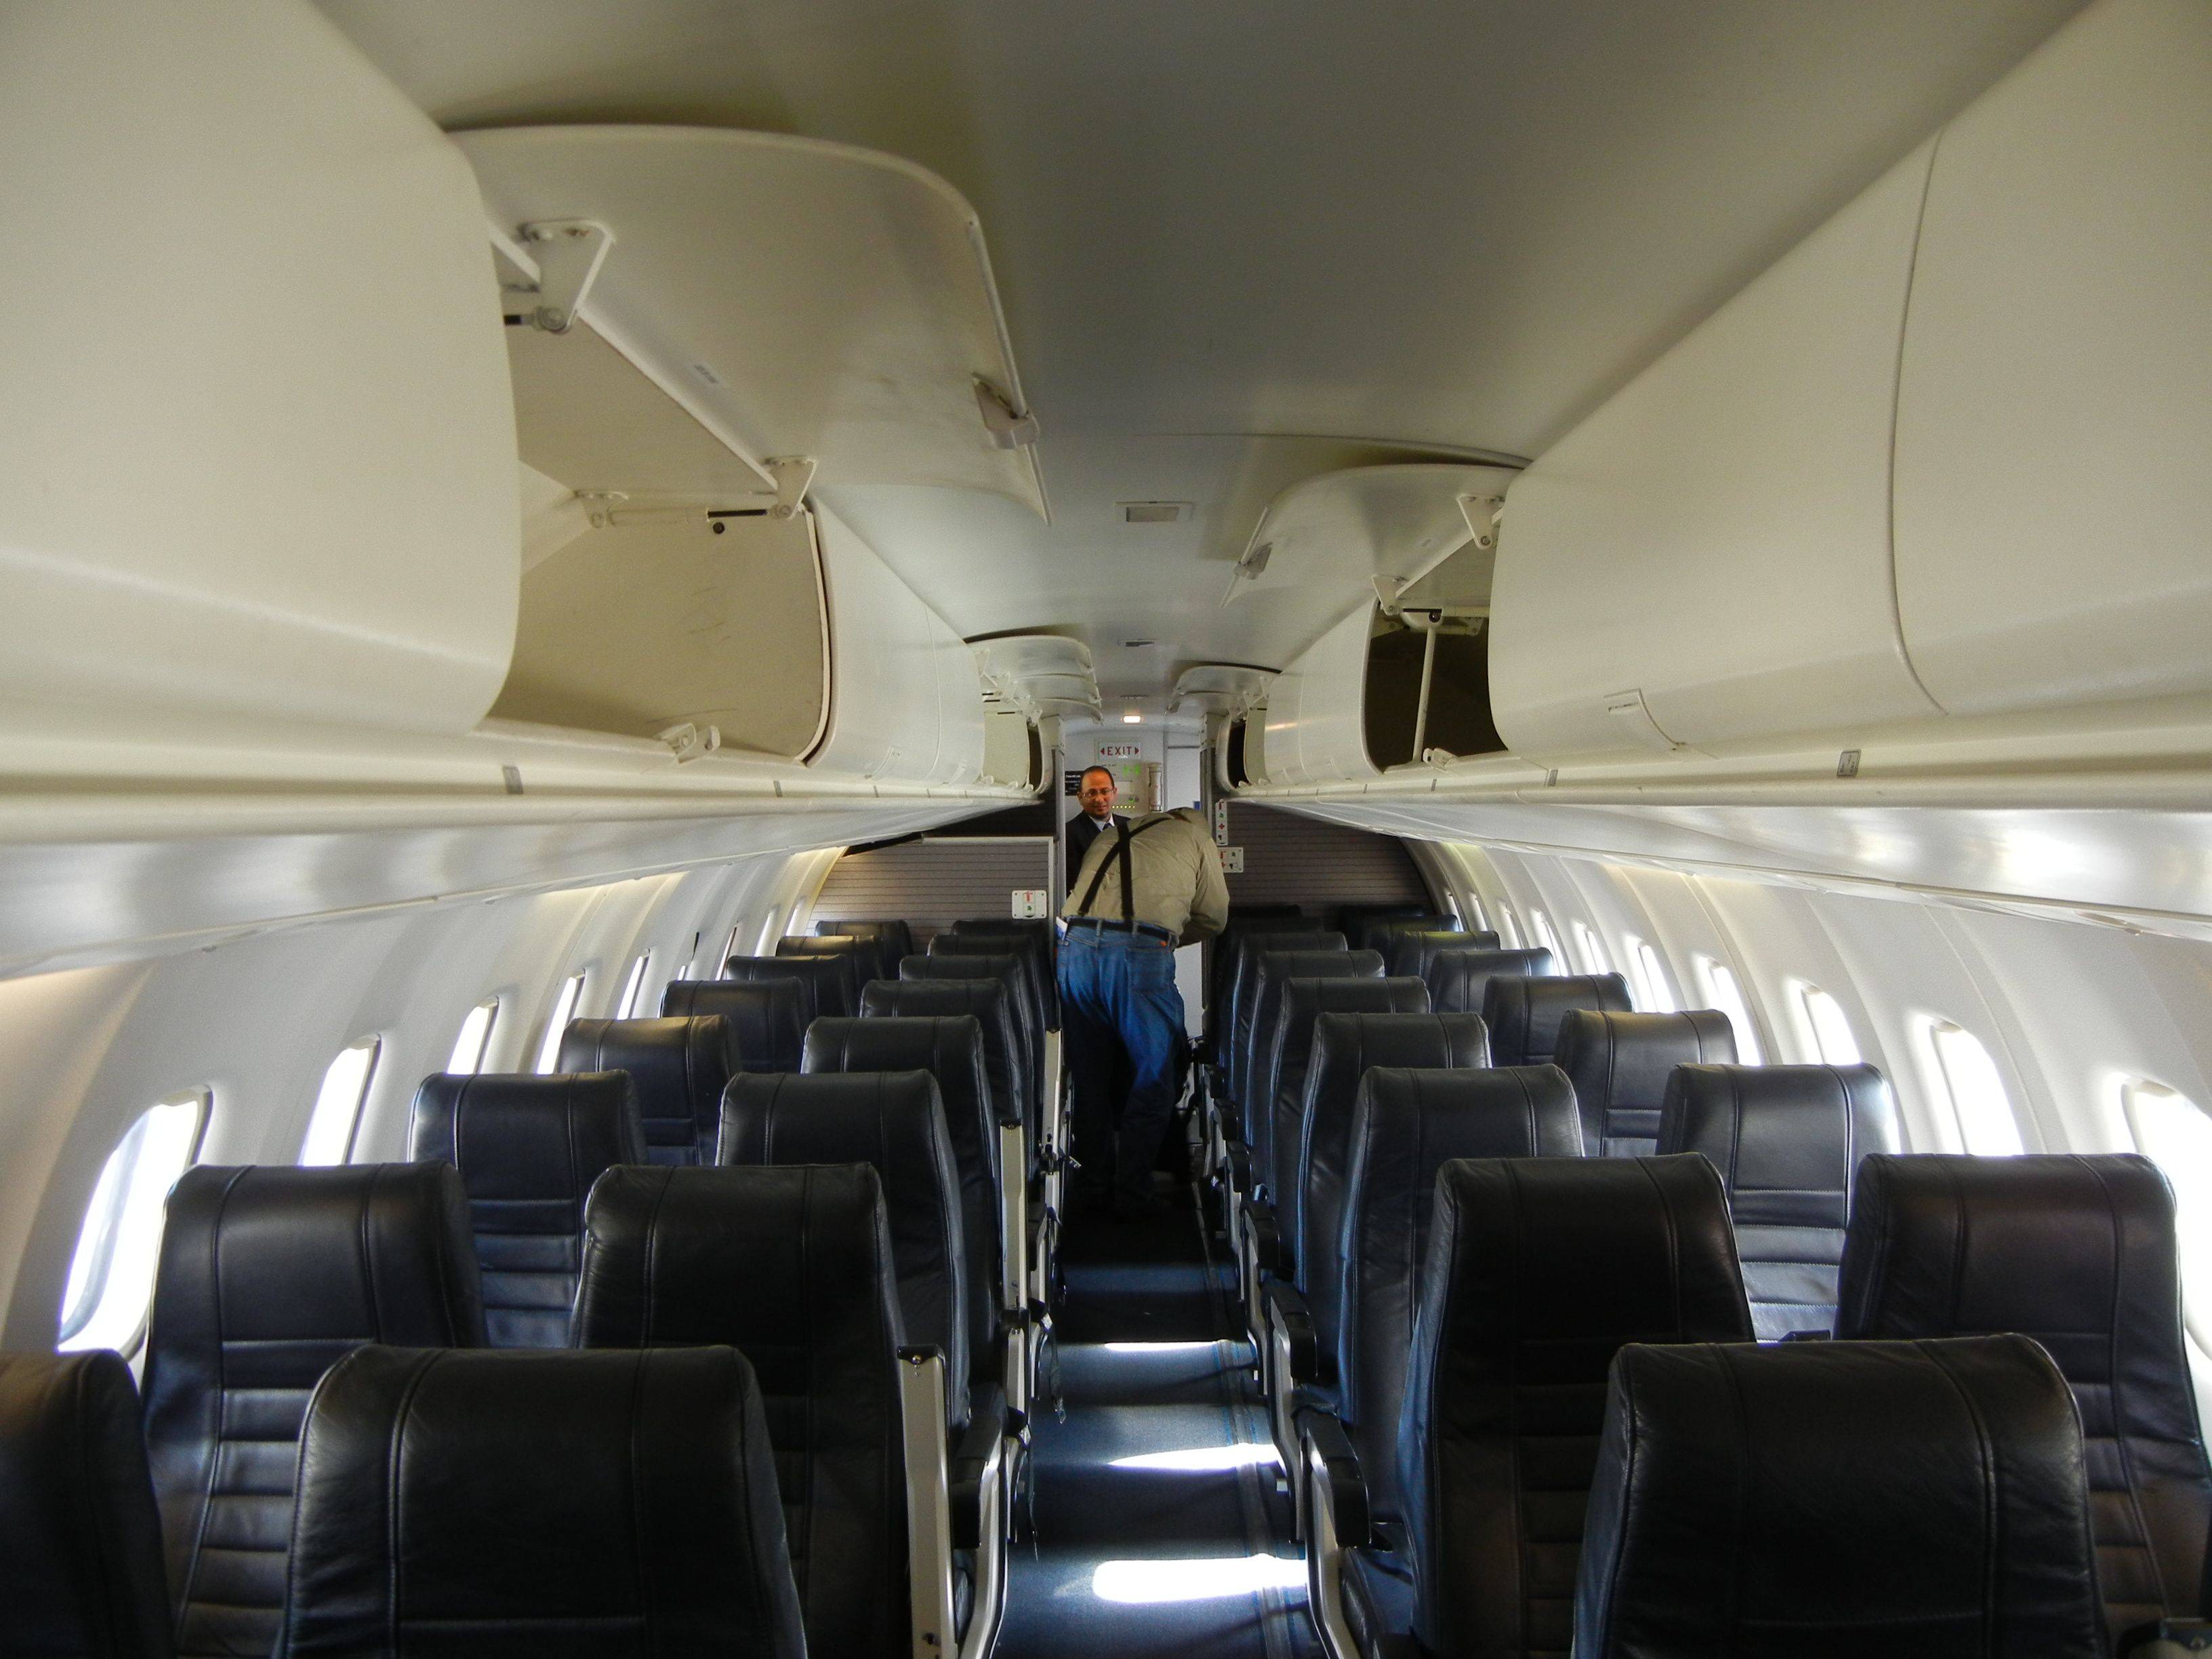 Самолет atr 42 — характеристики самолета, обзор салона